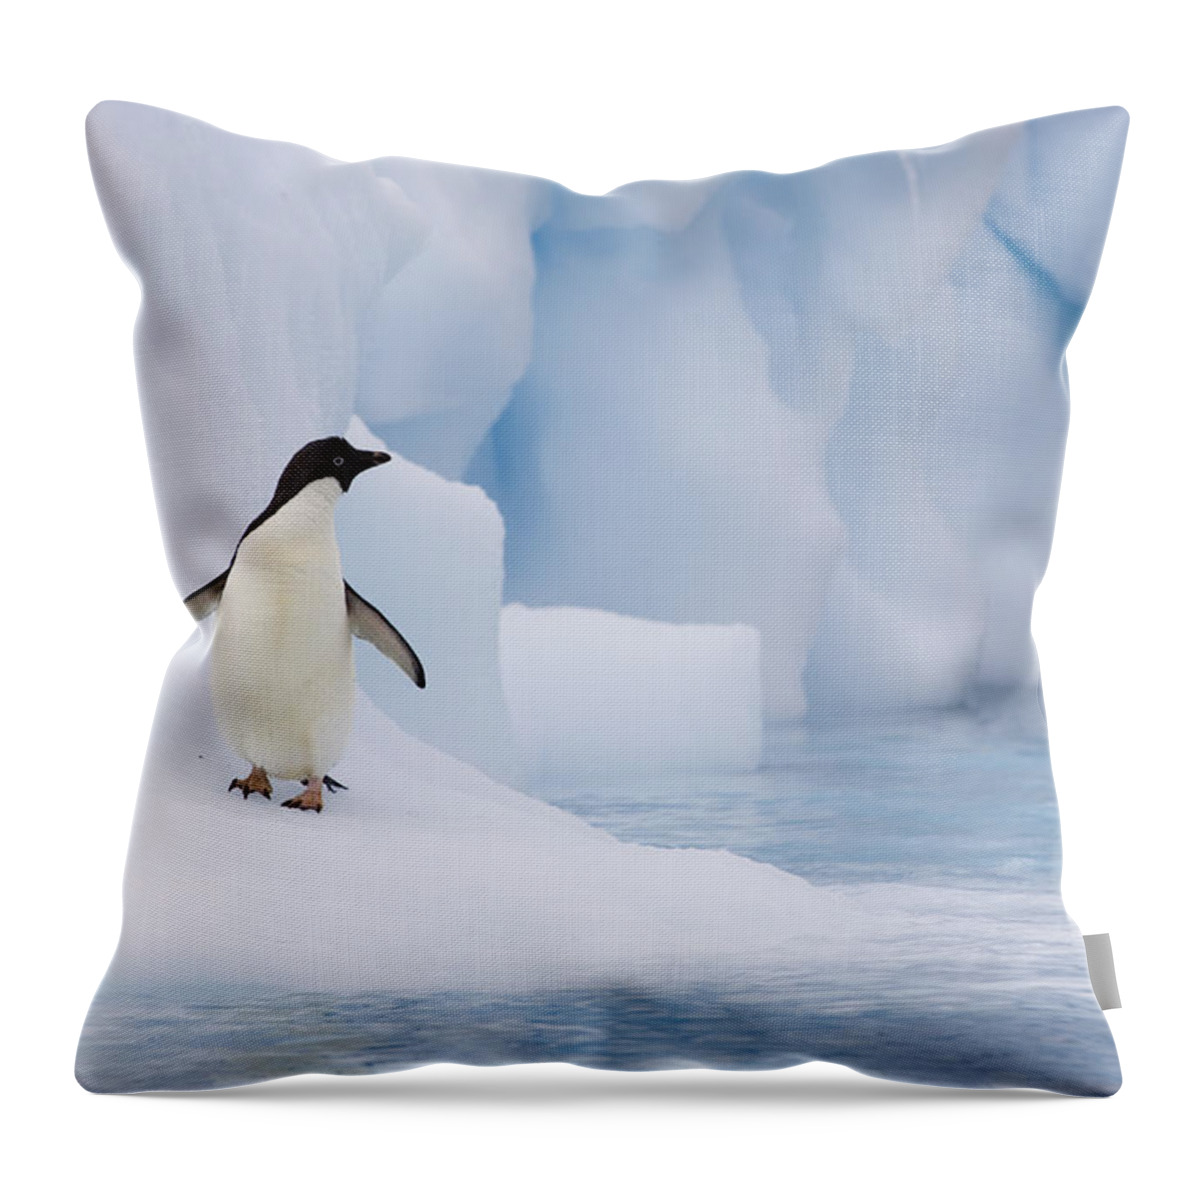 00761838 Throw Pillow featuring the photograph Adelie Penguin On Melting Iceberg by Suzi Eszterhas